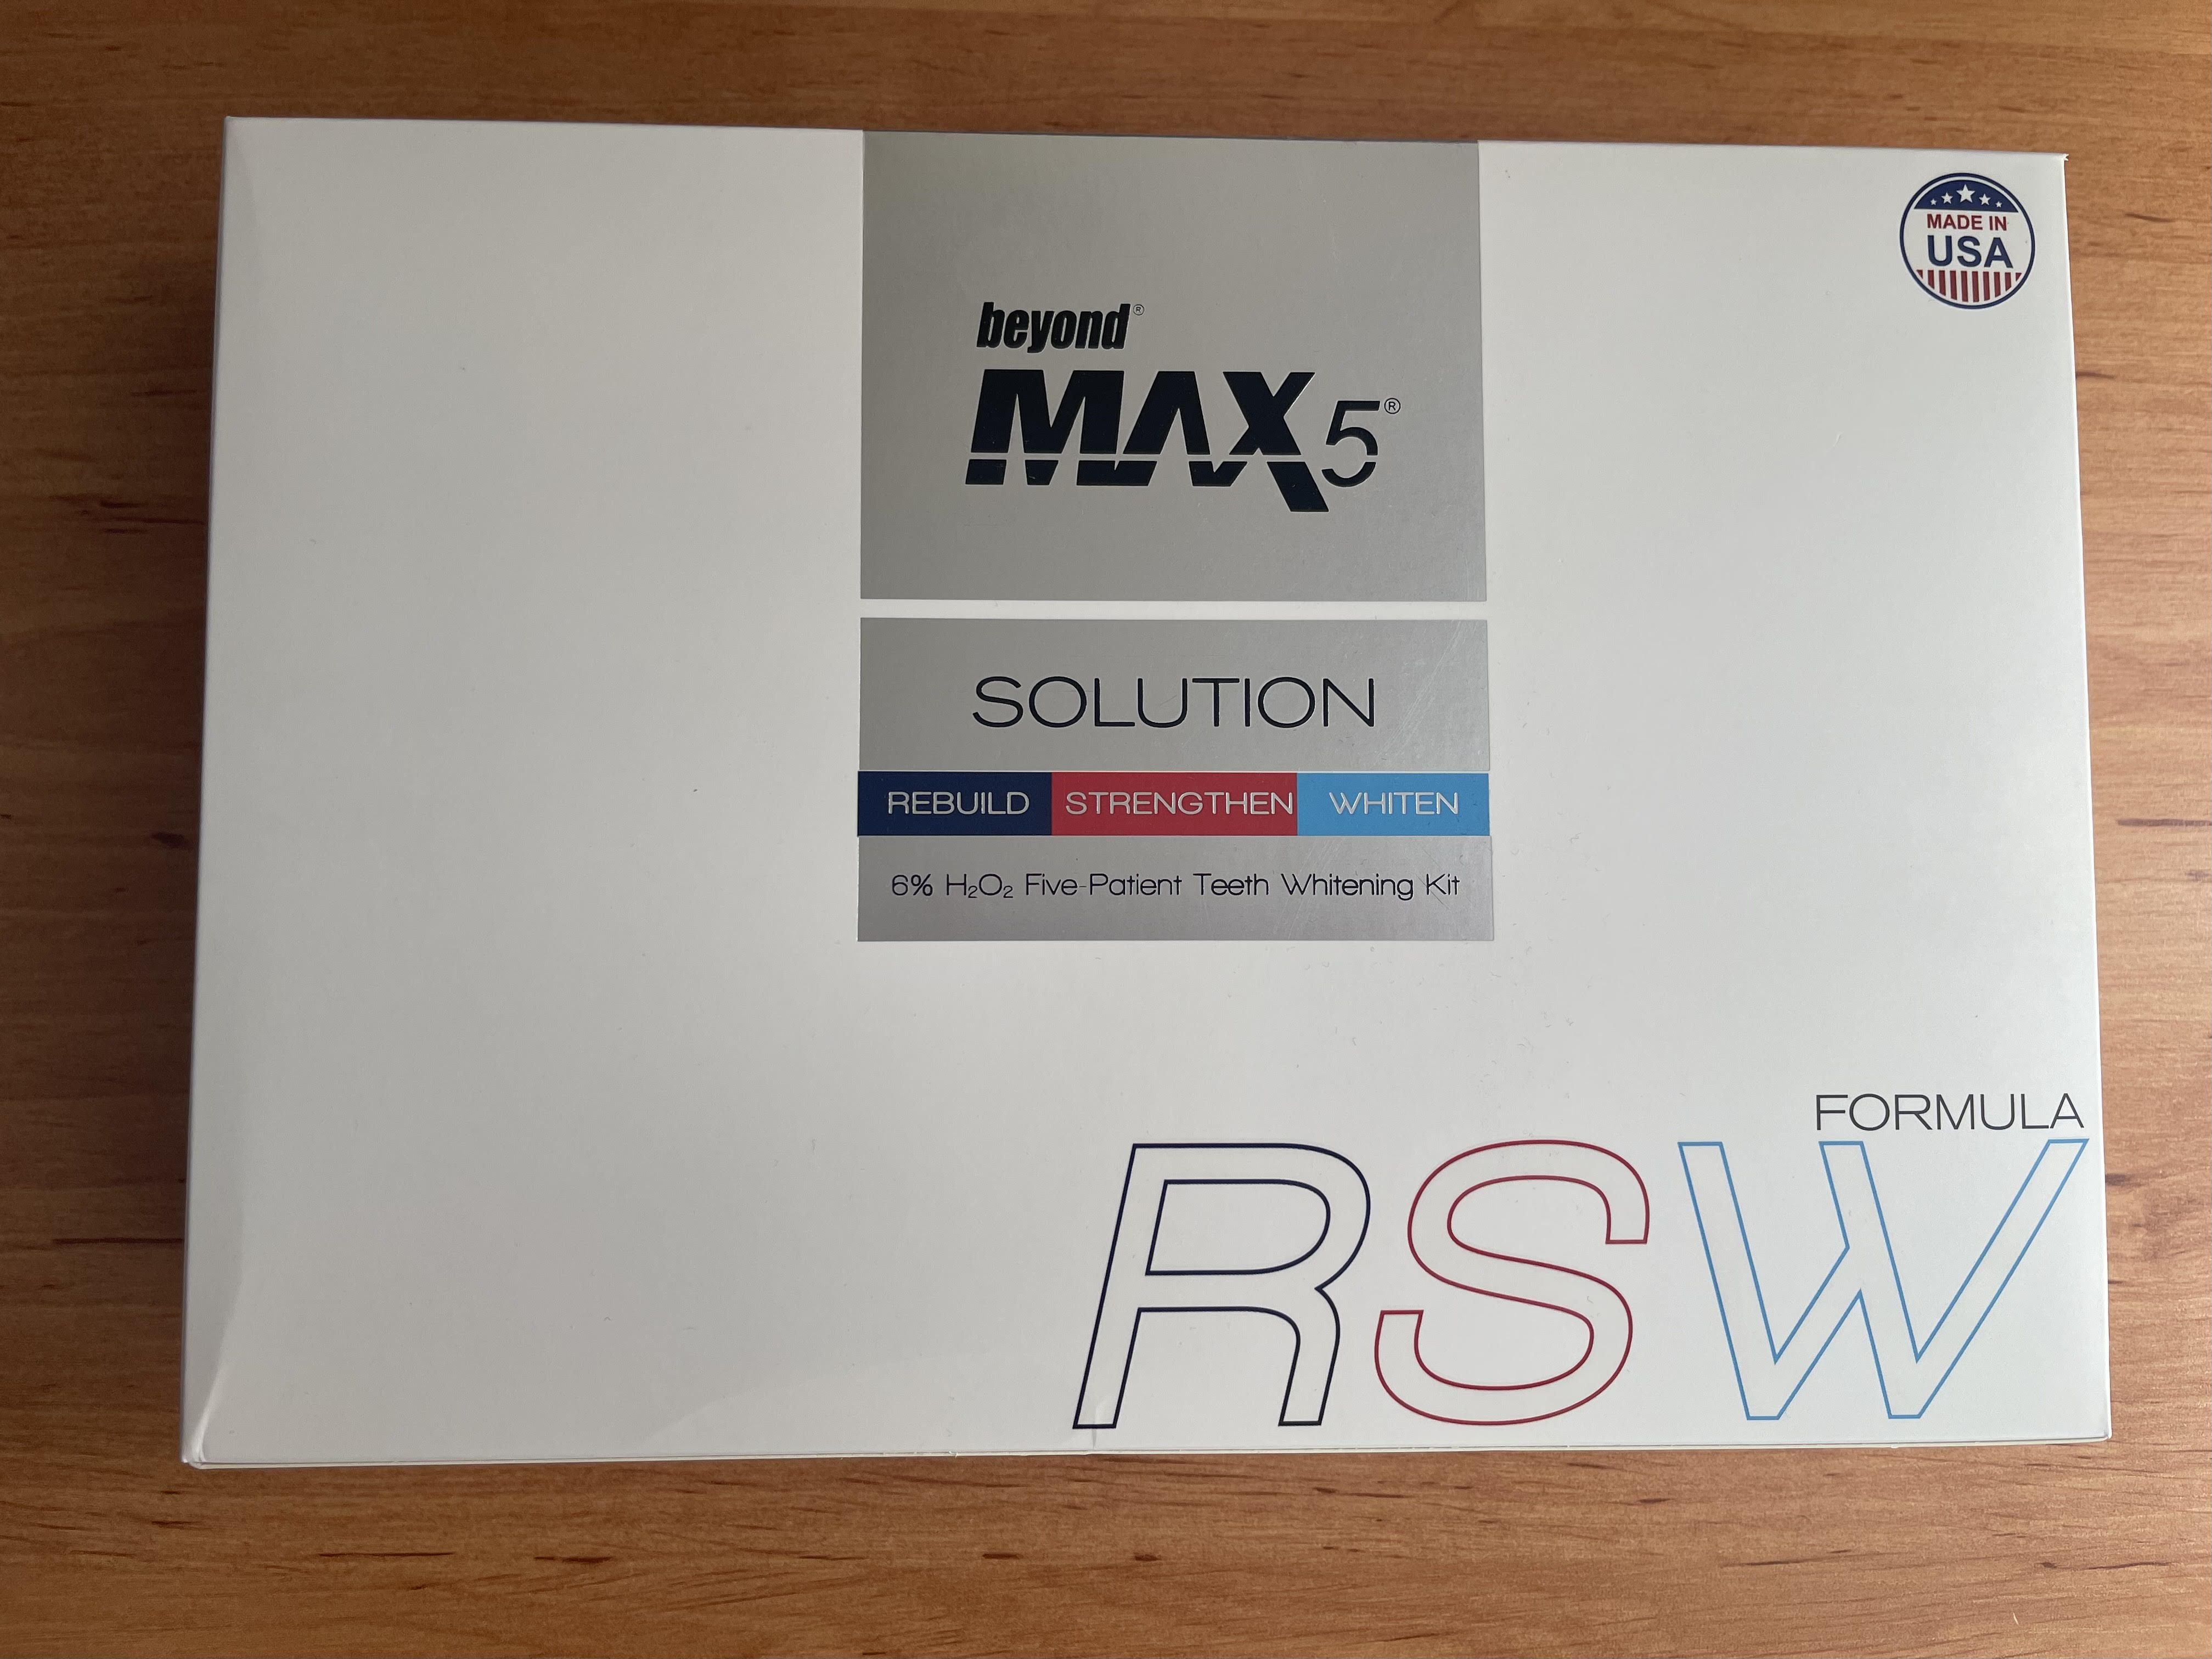 Beyond MAX5 Solution Kit